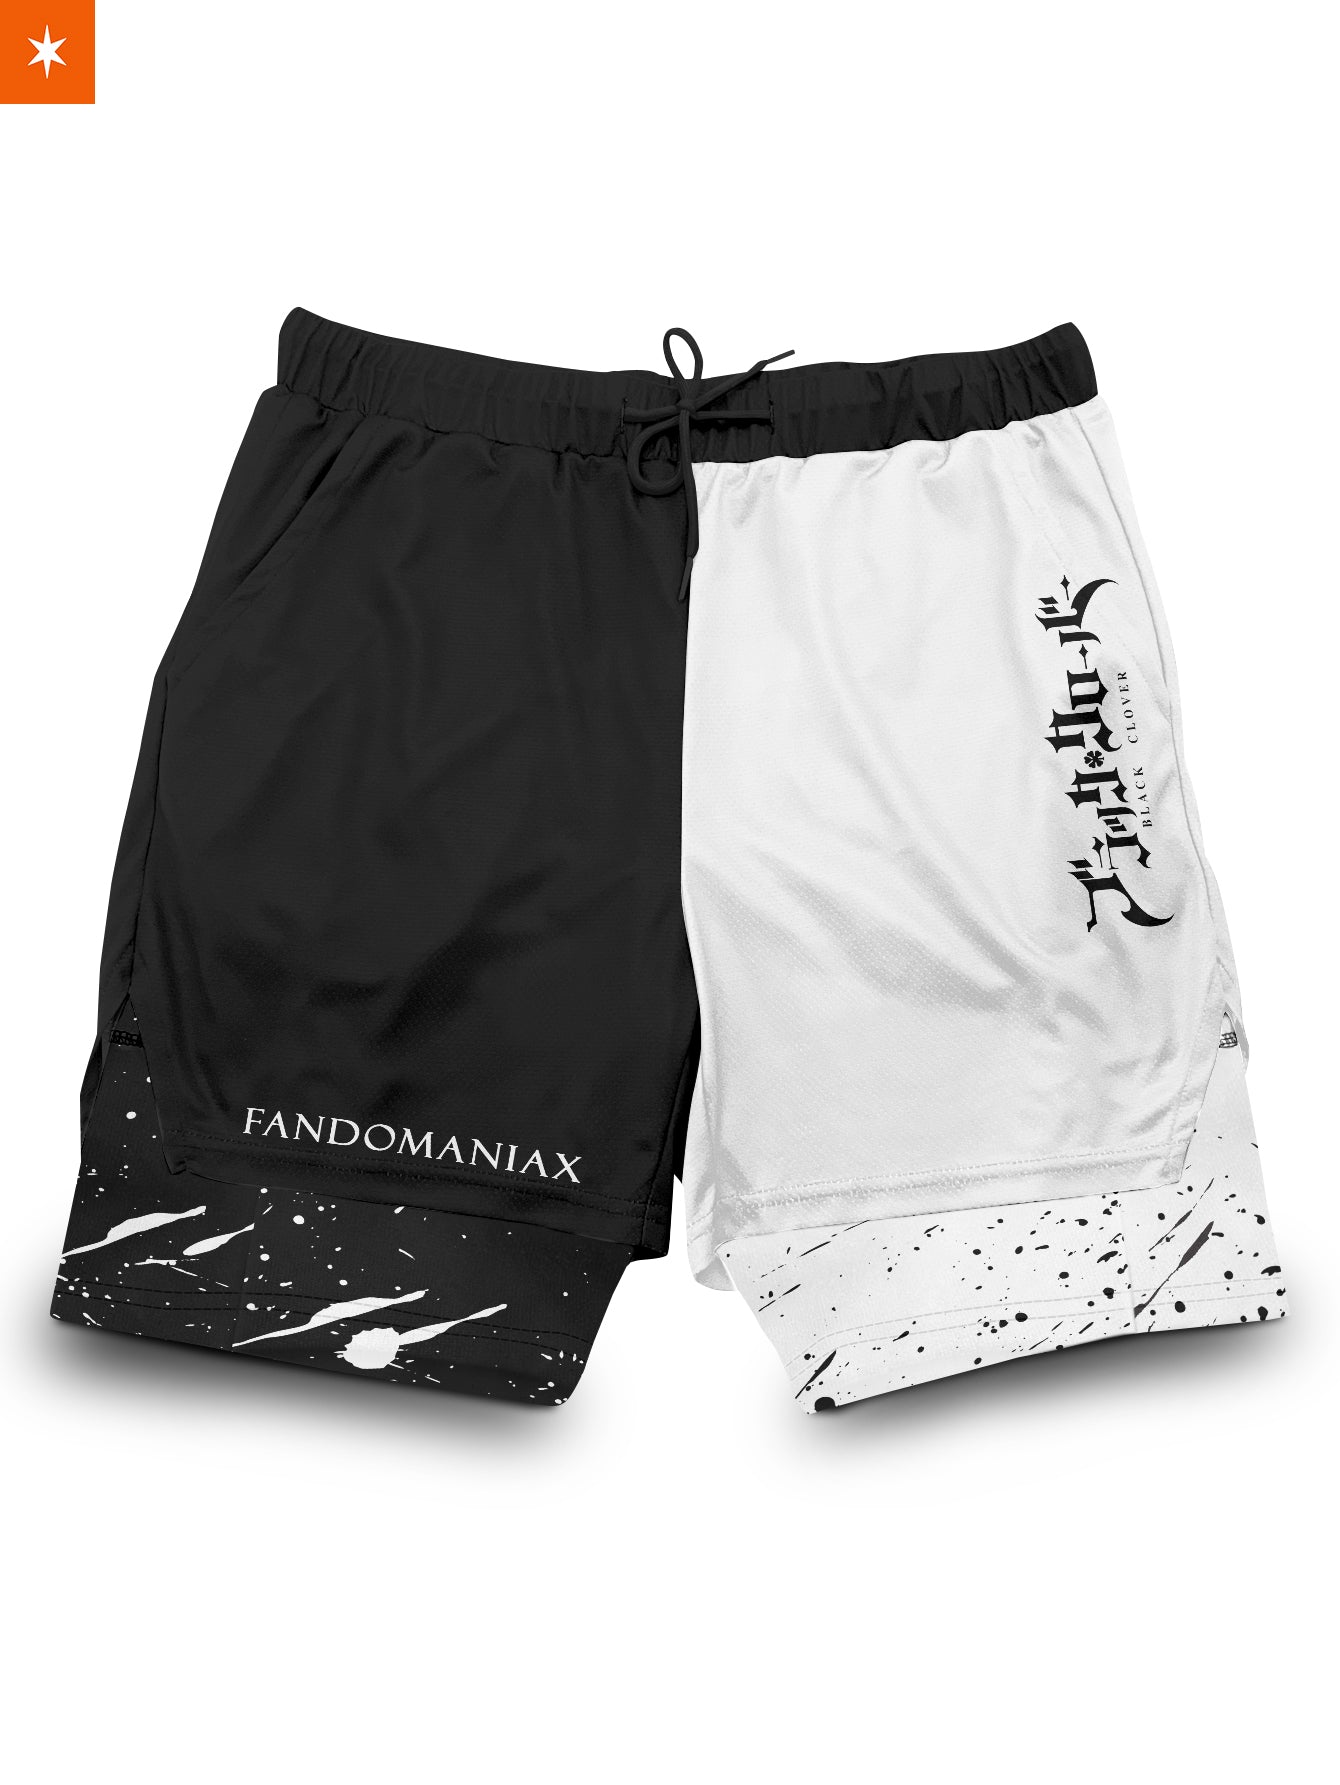 Fandomaniax - Five-Leaf Clover Performance Shorts